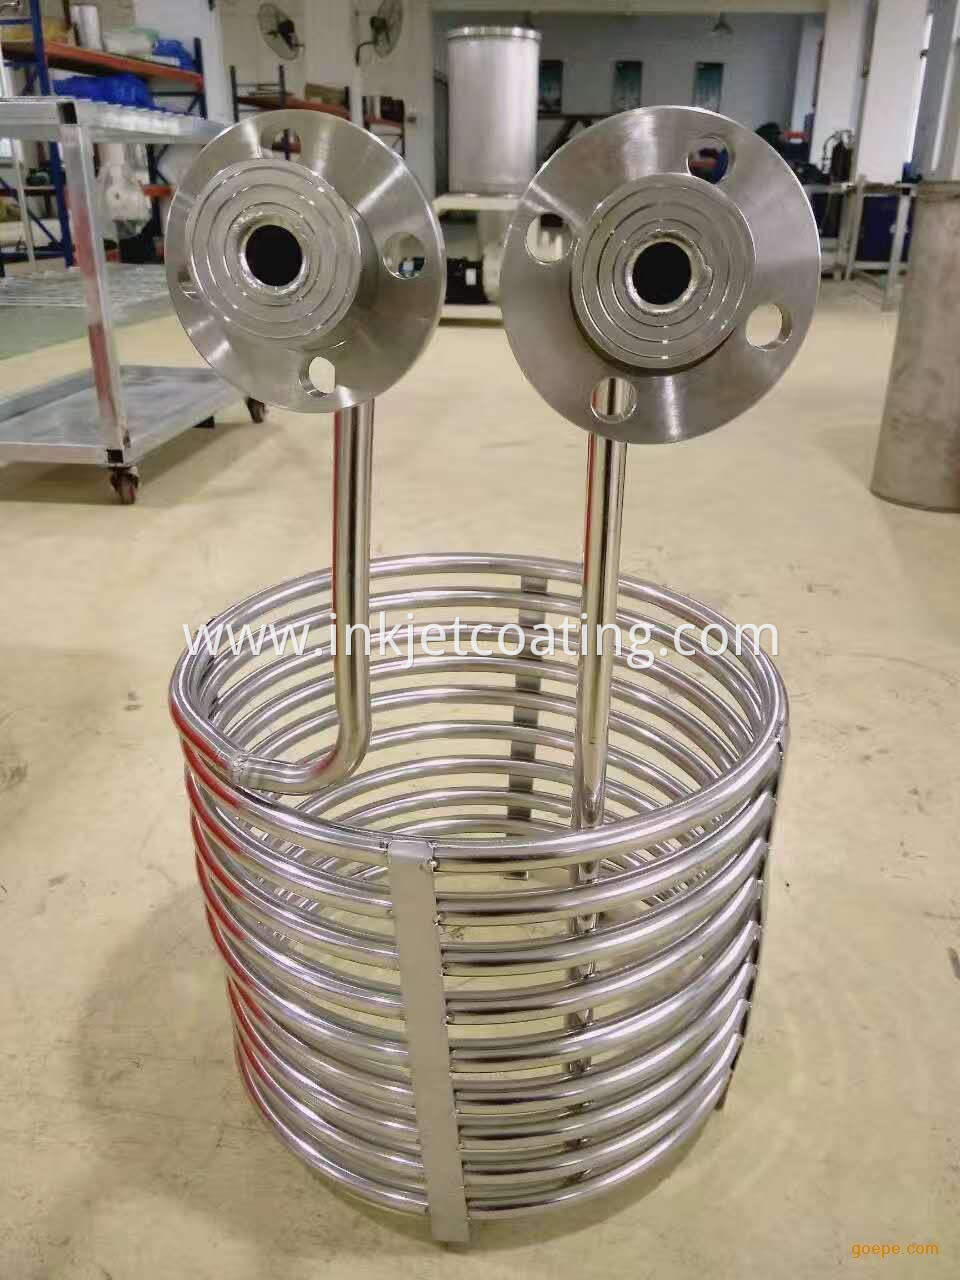 Titanium-immersed-coil-type-heat-exchanger.4-3